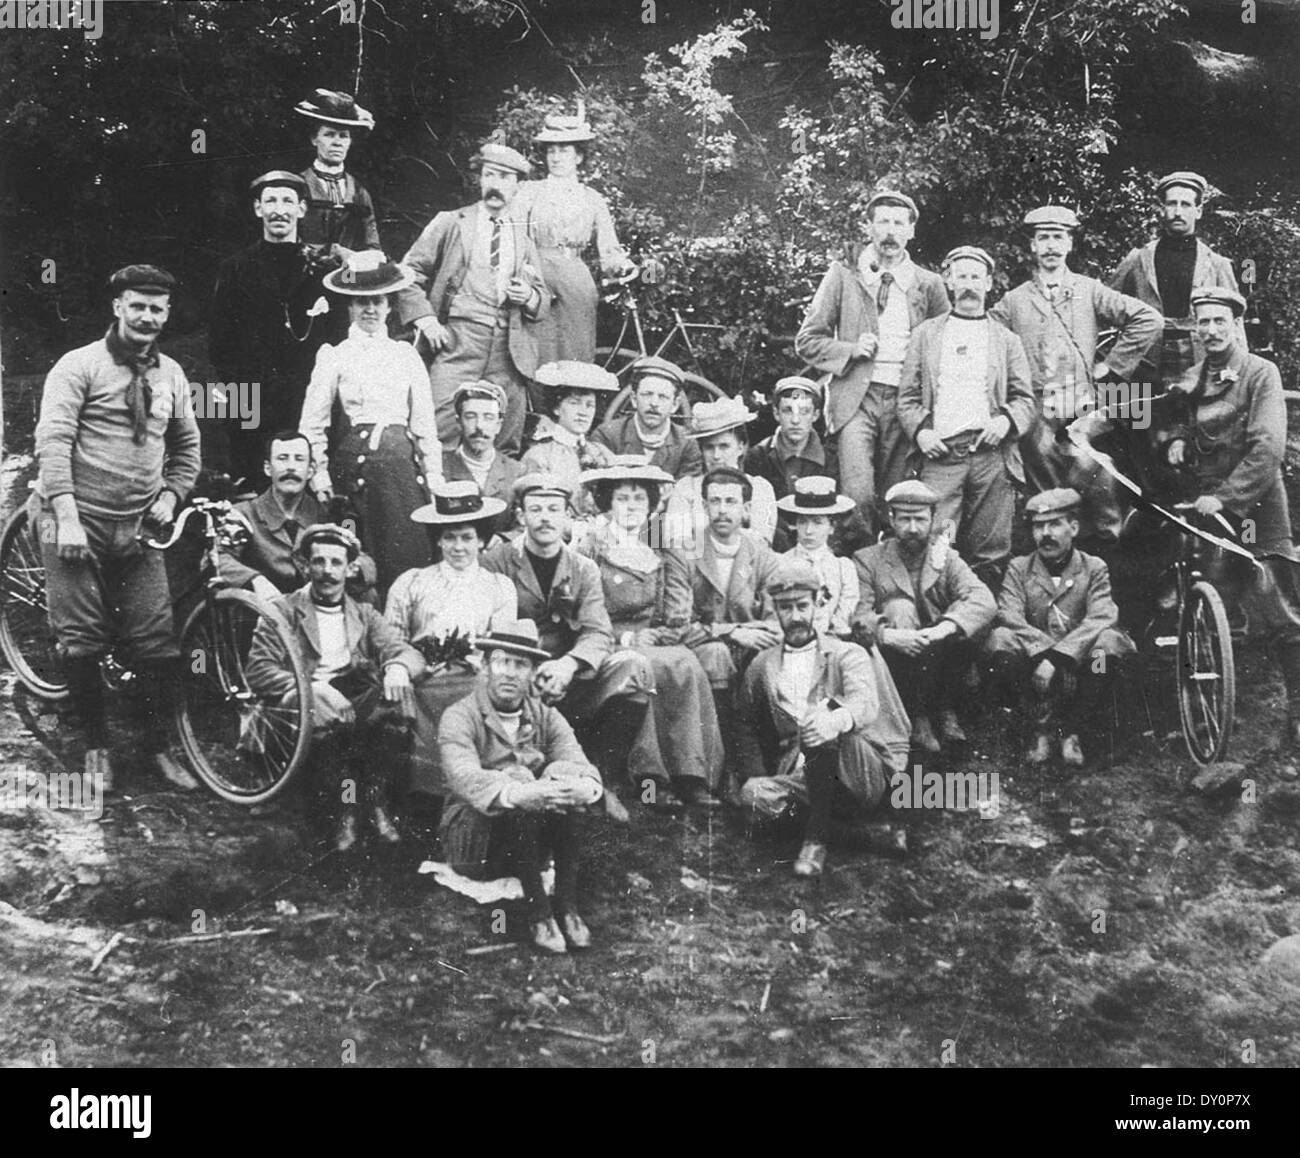 Waratah Rovers Bicycle Club (WRBC) on tour. Sydney - Campbelltown - Appin - Bulli - South Coast. Photo taken at Picton - Picton, NSW, October 1900 Stock Photo